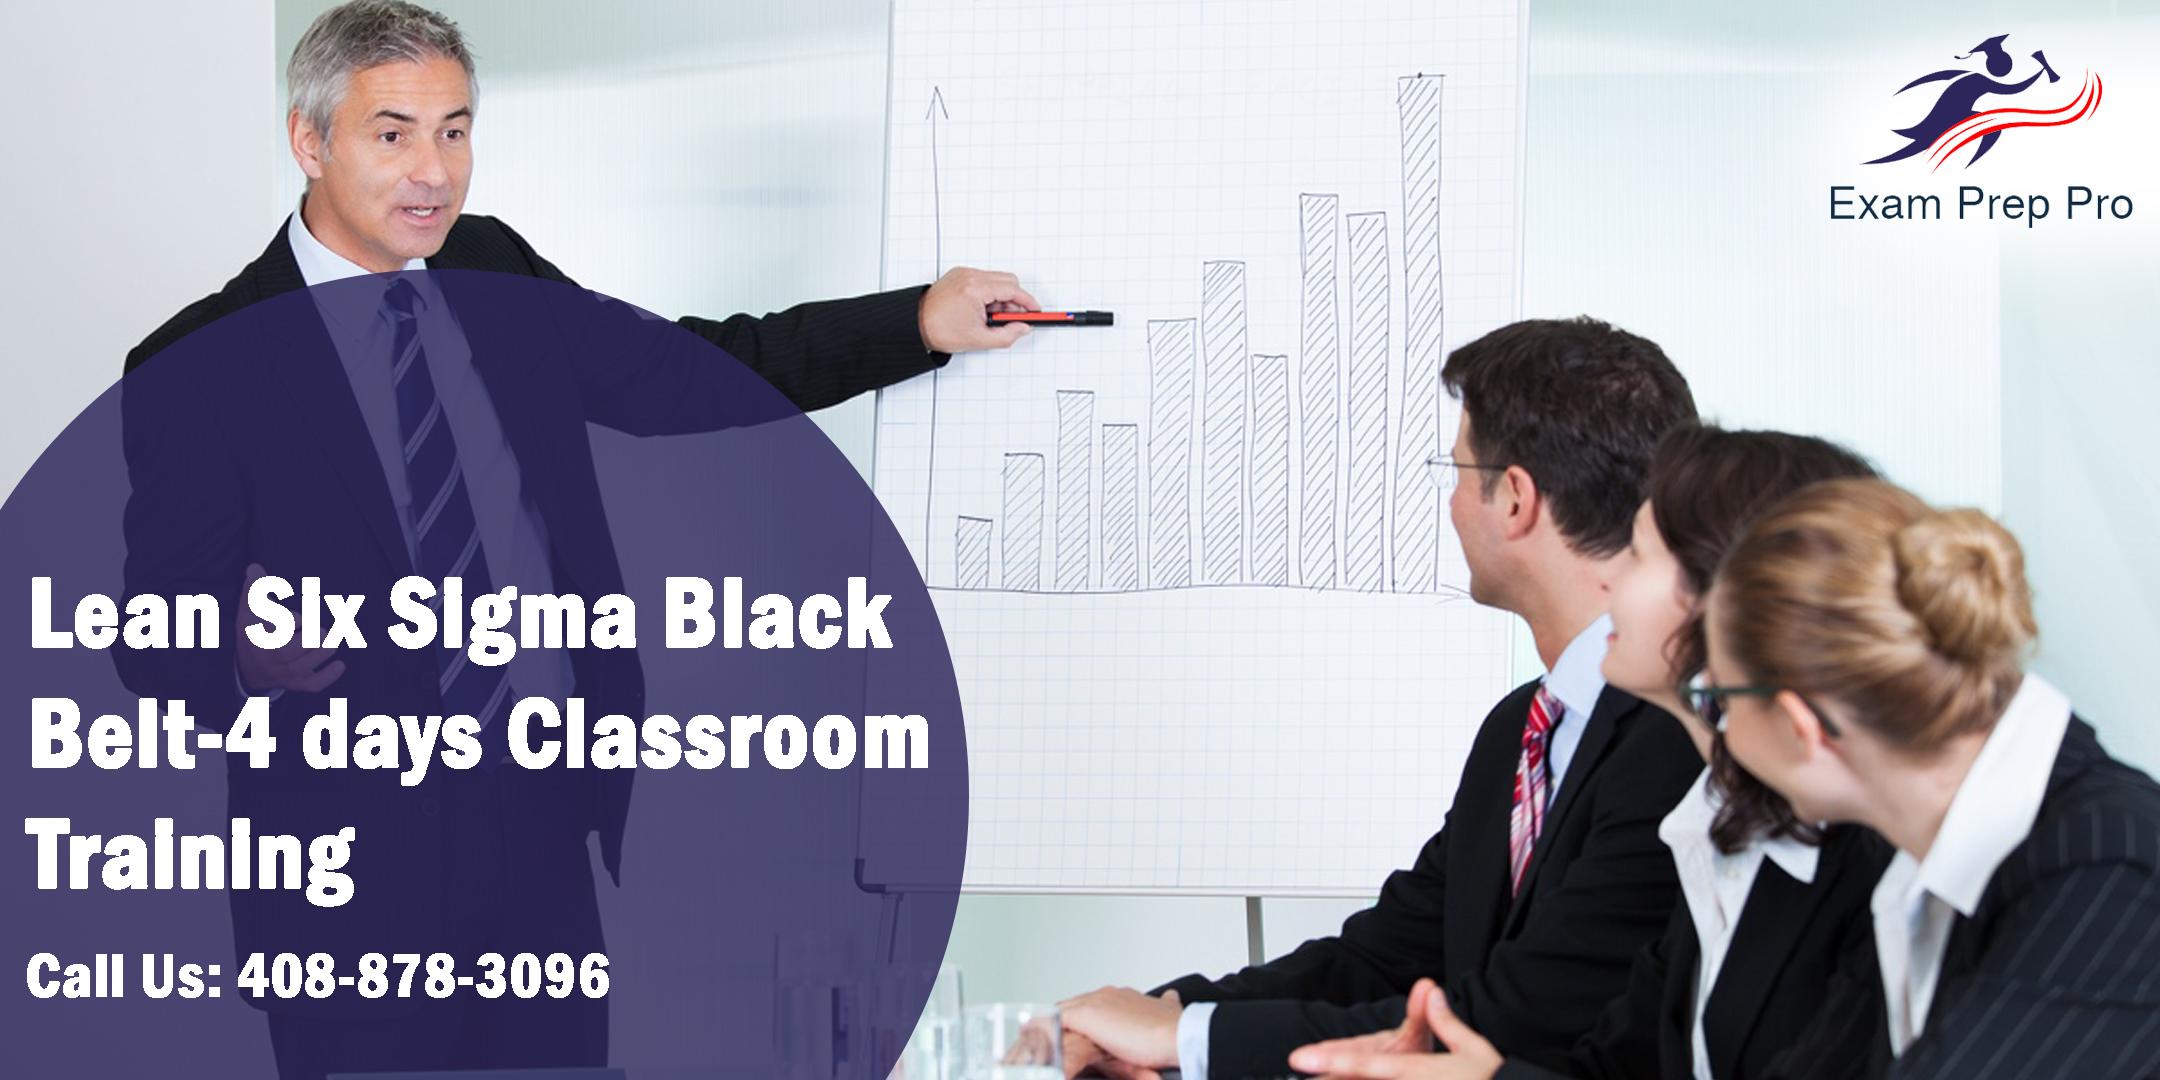 Lean Six Sigma Black Belt-4 days Classroom Training in San Francisco, CA